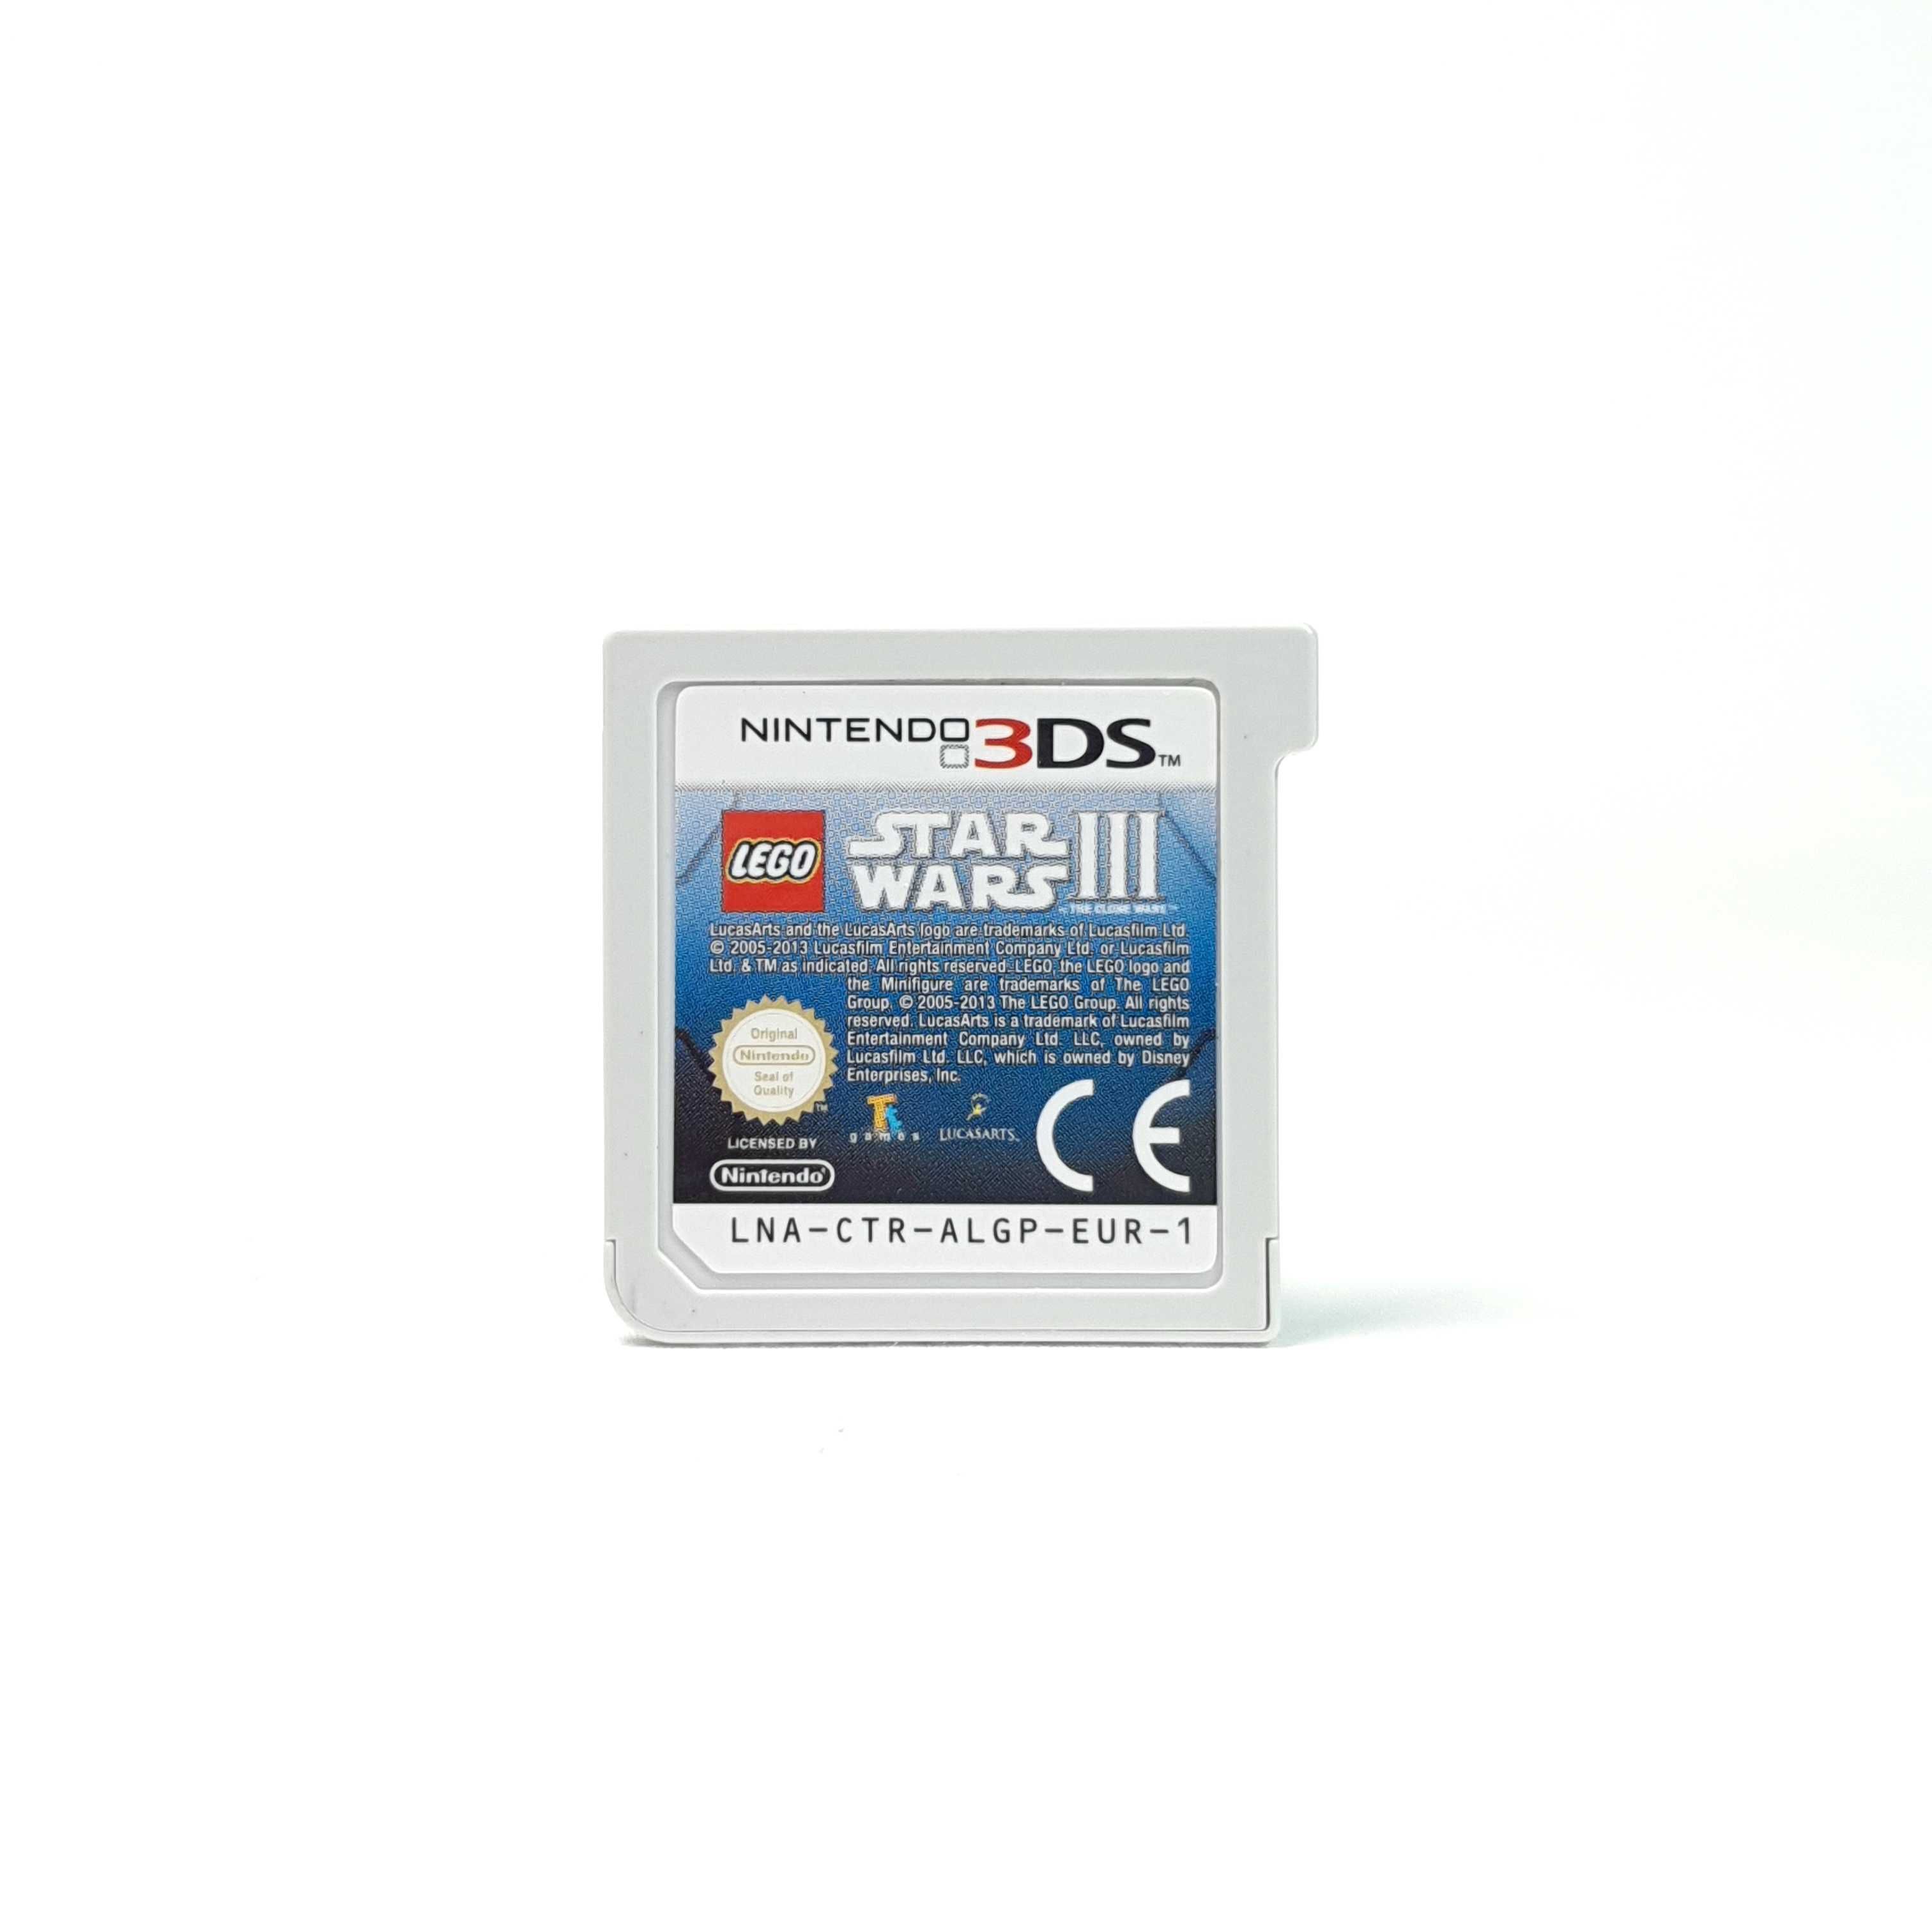 LEGO Star Wars III (Nintendo 3DS, 2013) - Completo e Testado